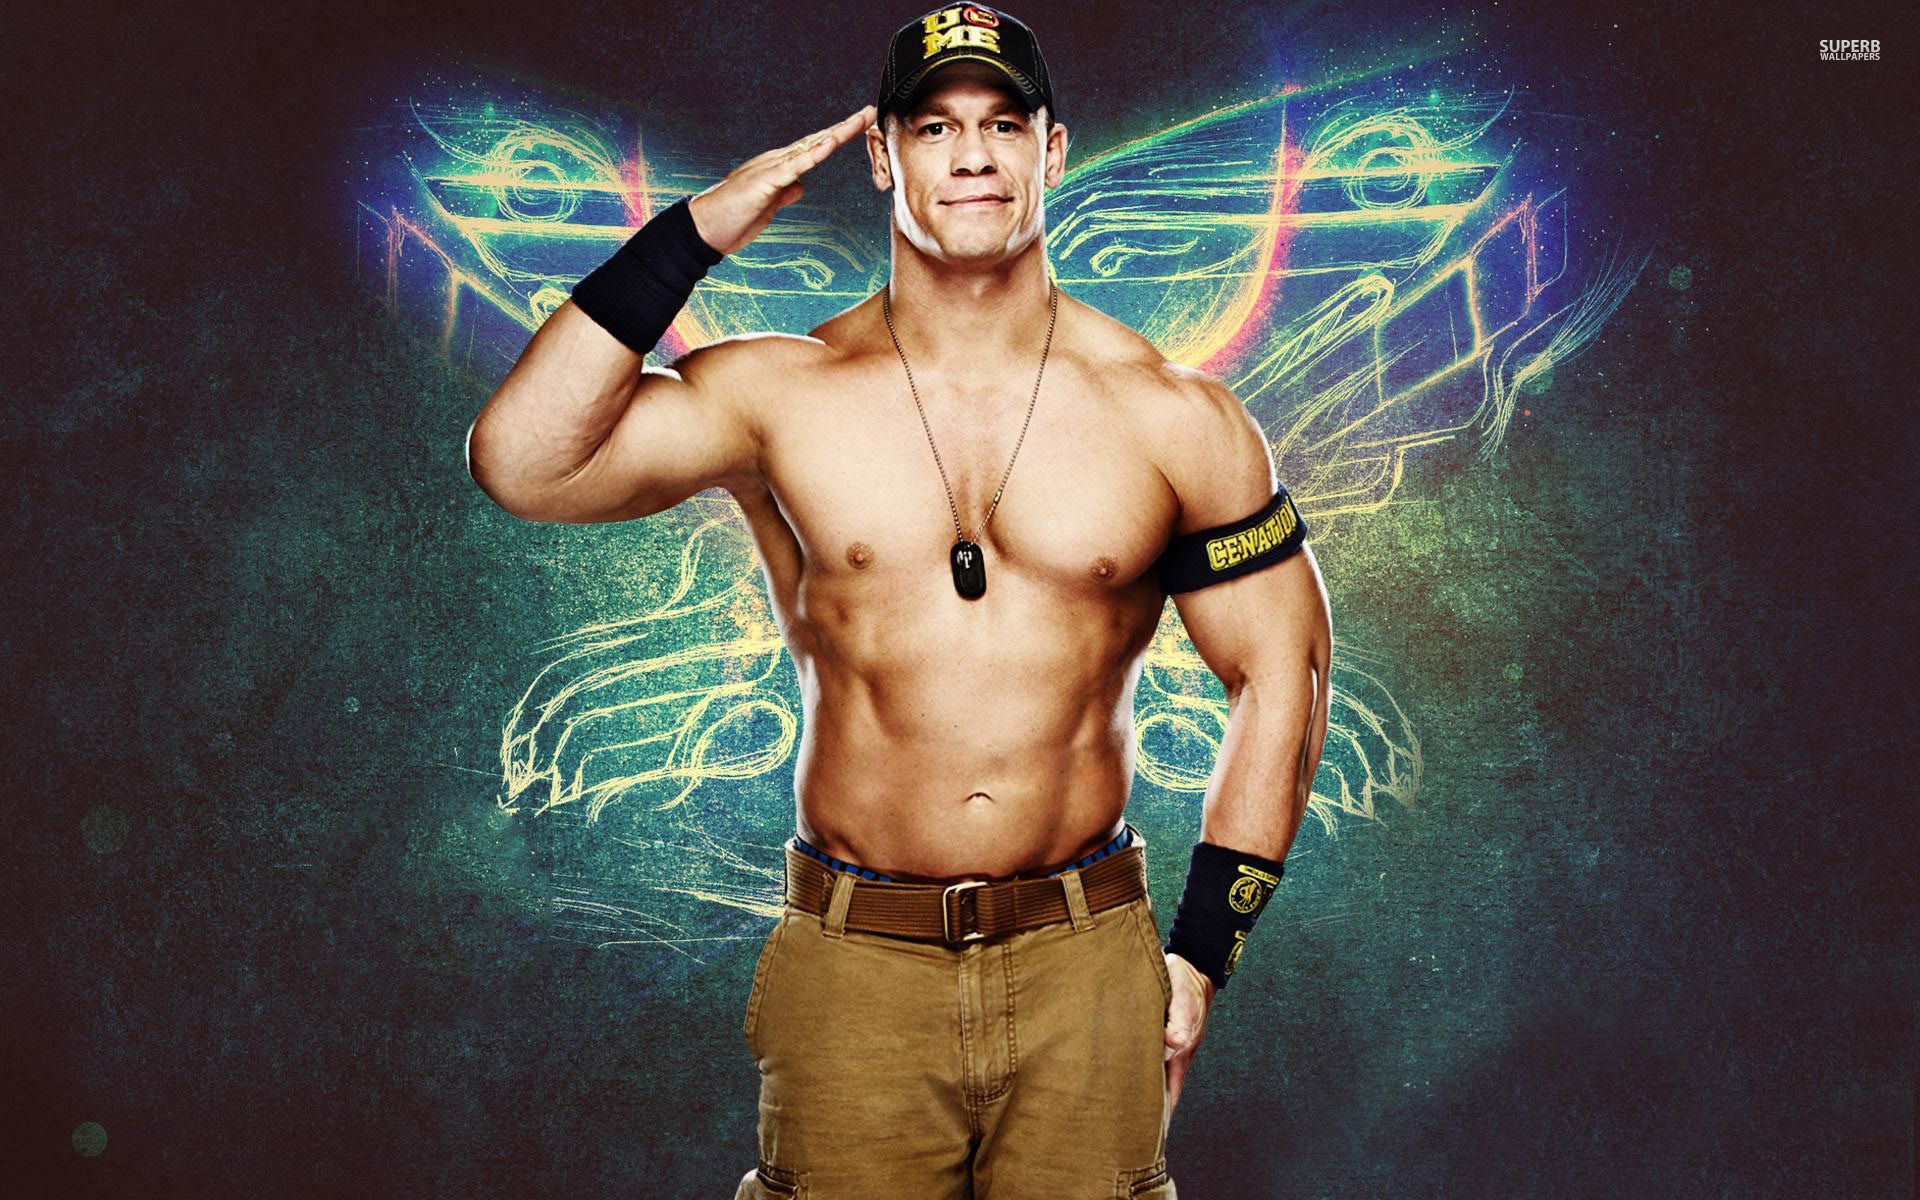 John Cena vs The Rock wallpaper - Sport wallpapers - #28361